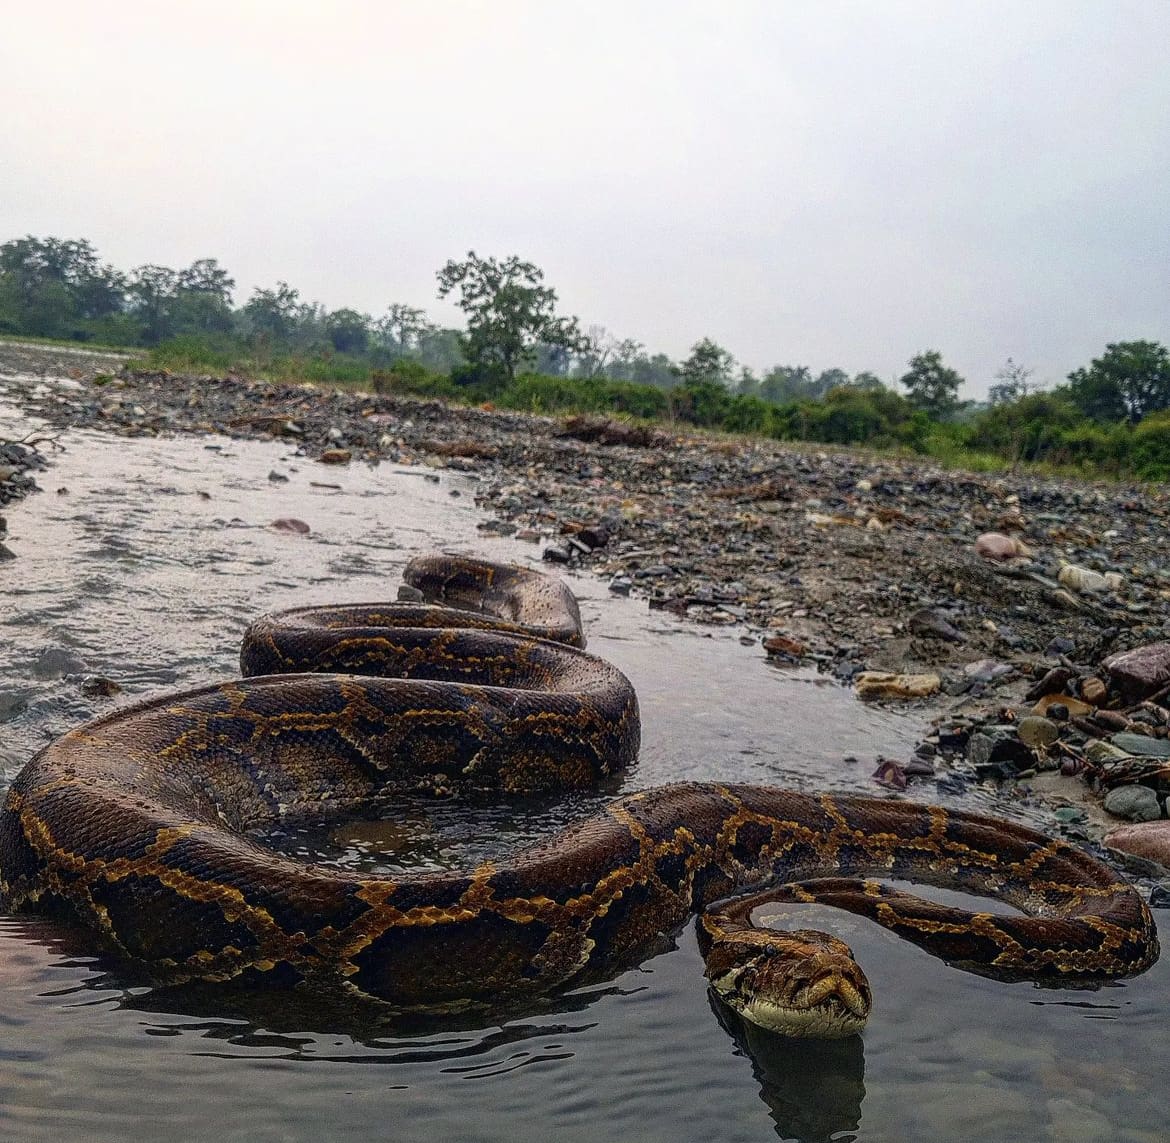 Burmese python in a stream